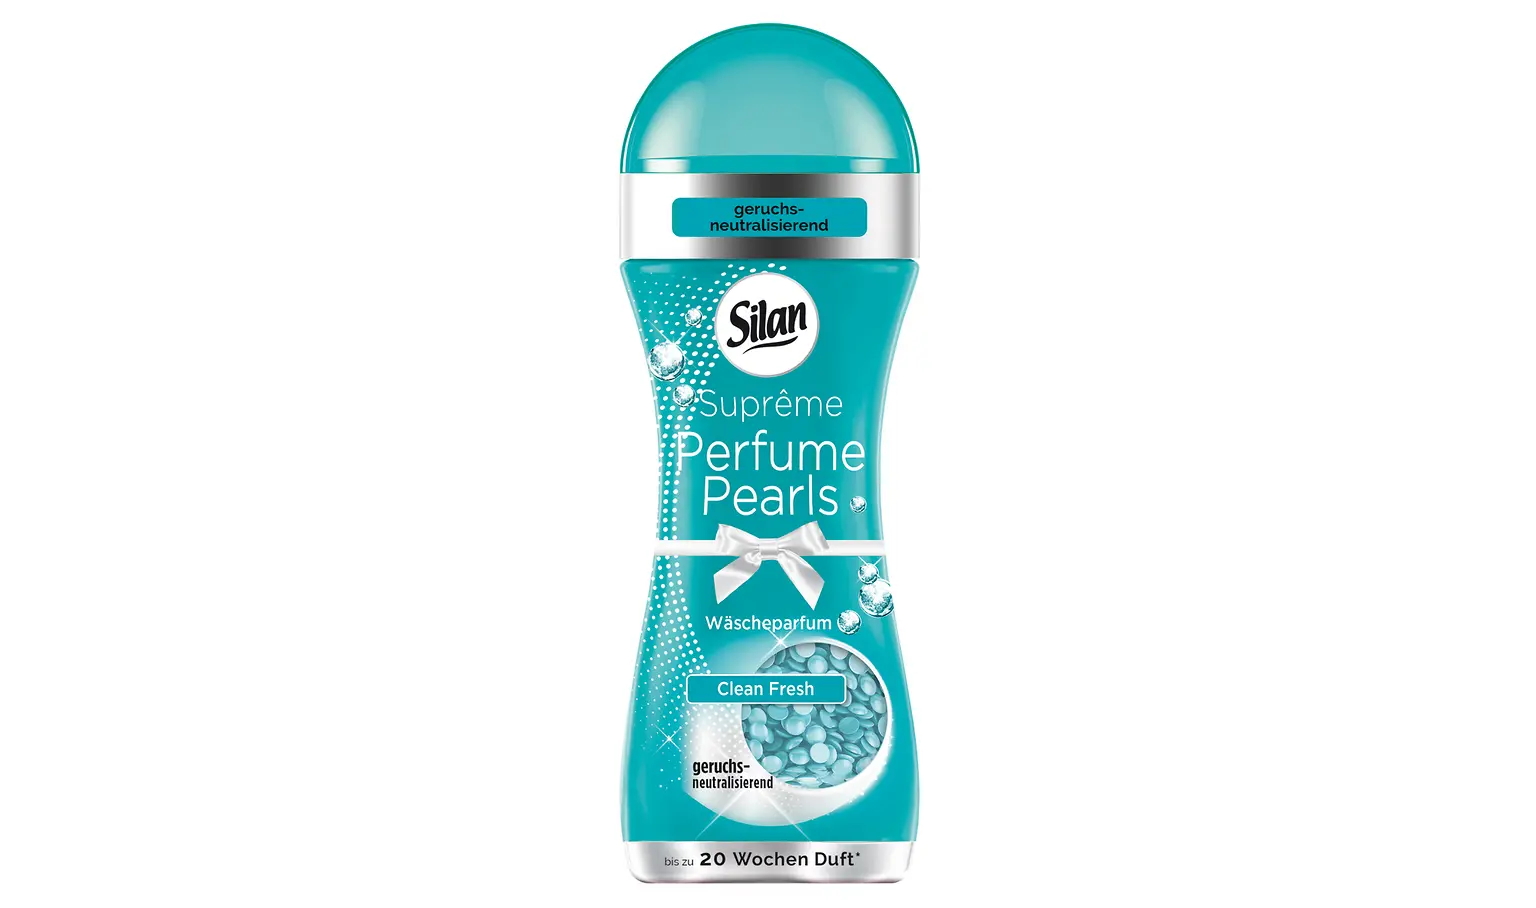 Silan Suprême Perfume Pearls Clean Fresh